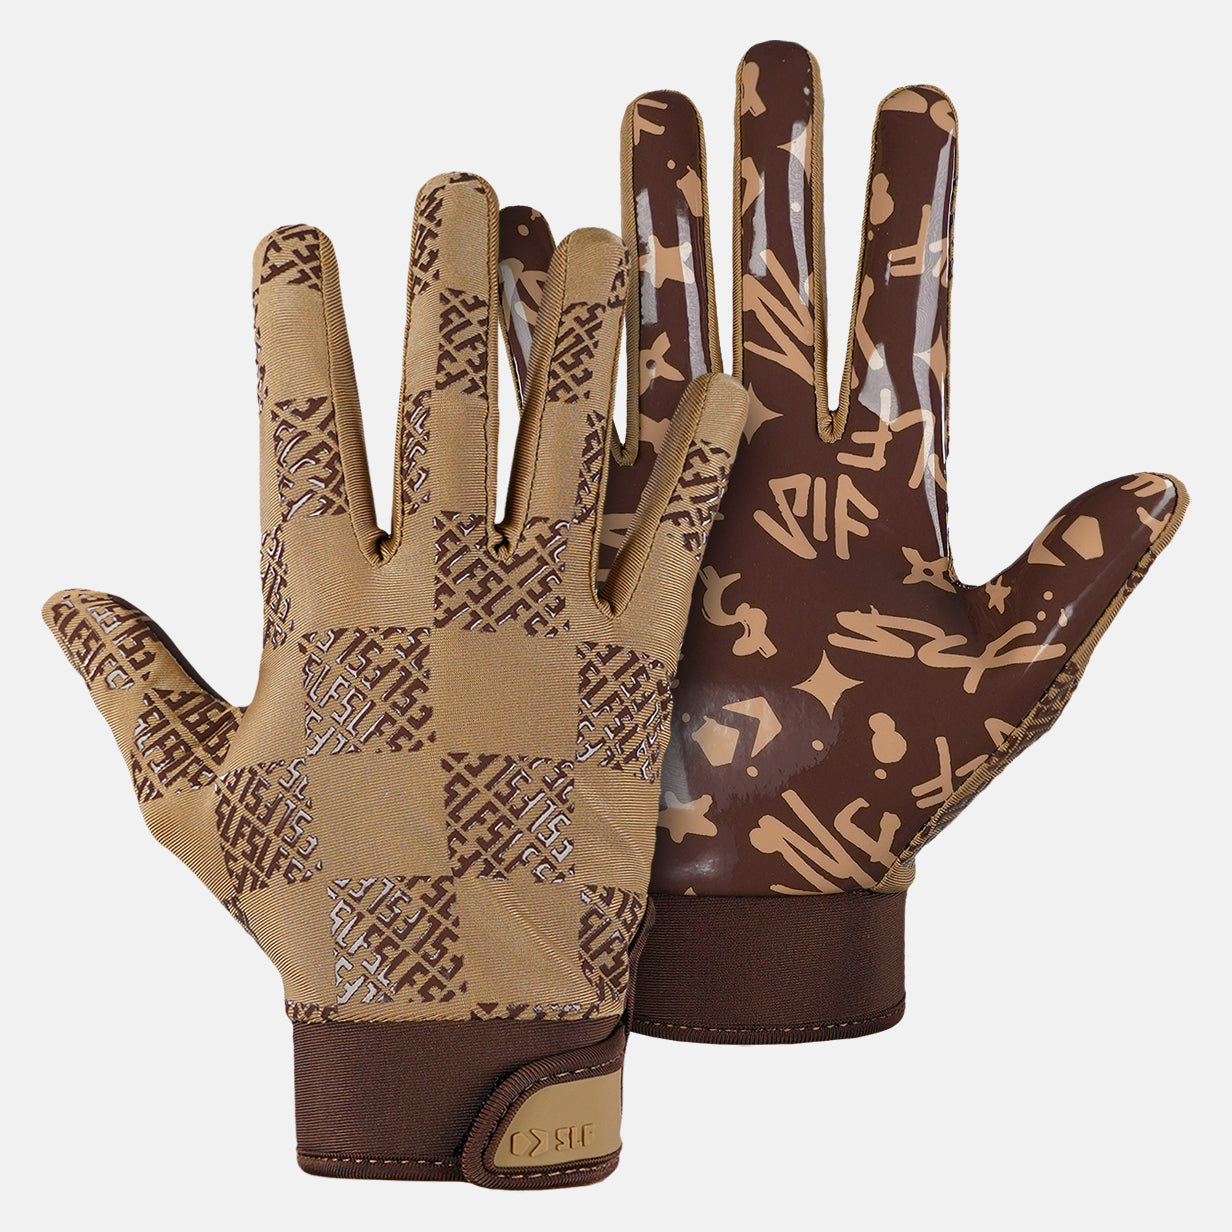 SLF Milan Pattern Sticky Football Receiver Gloves – SLEEFS